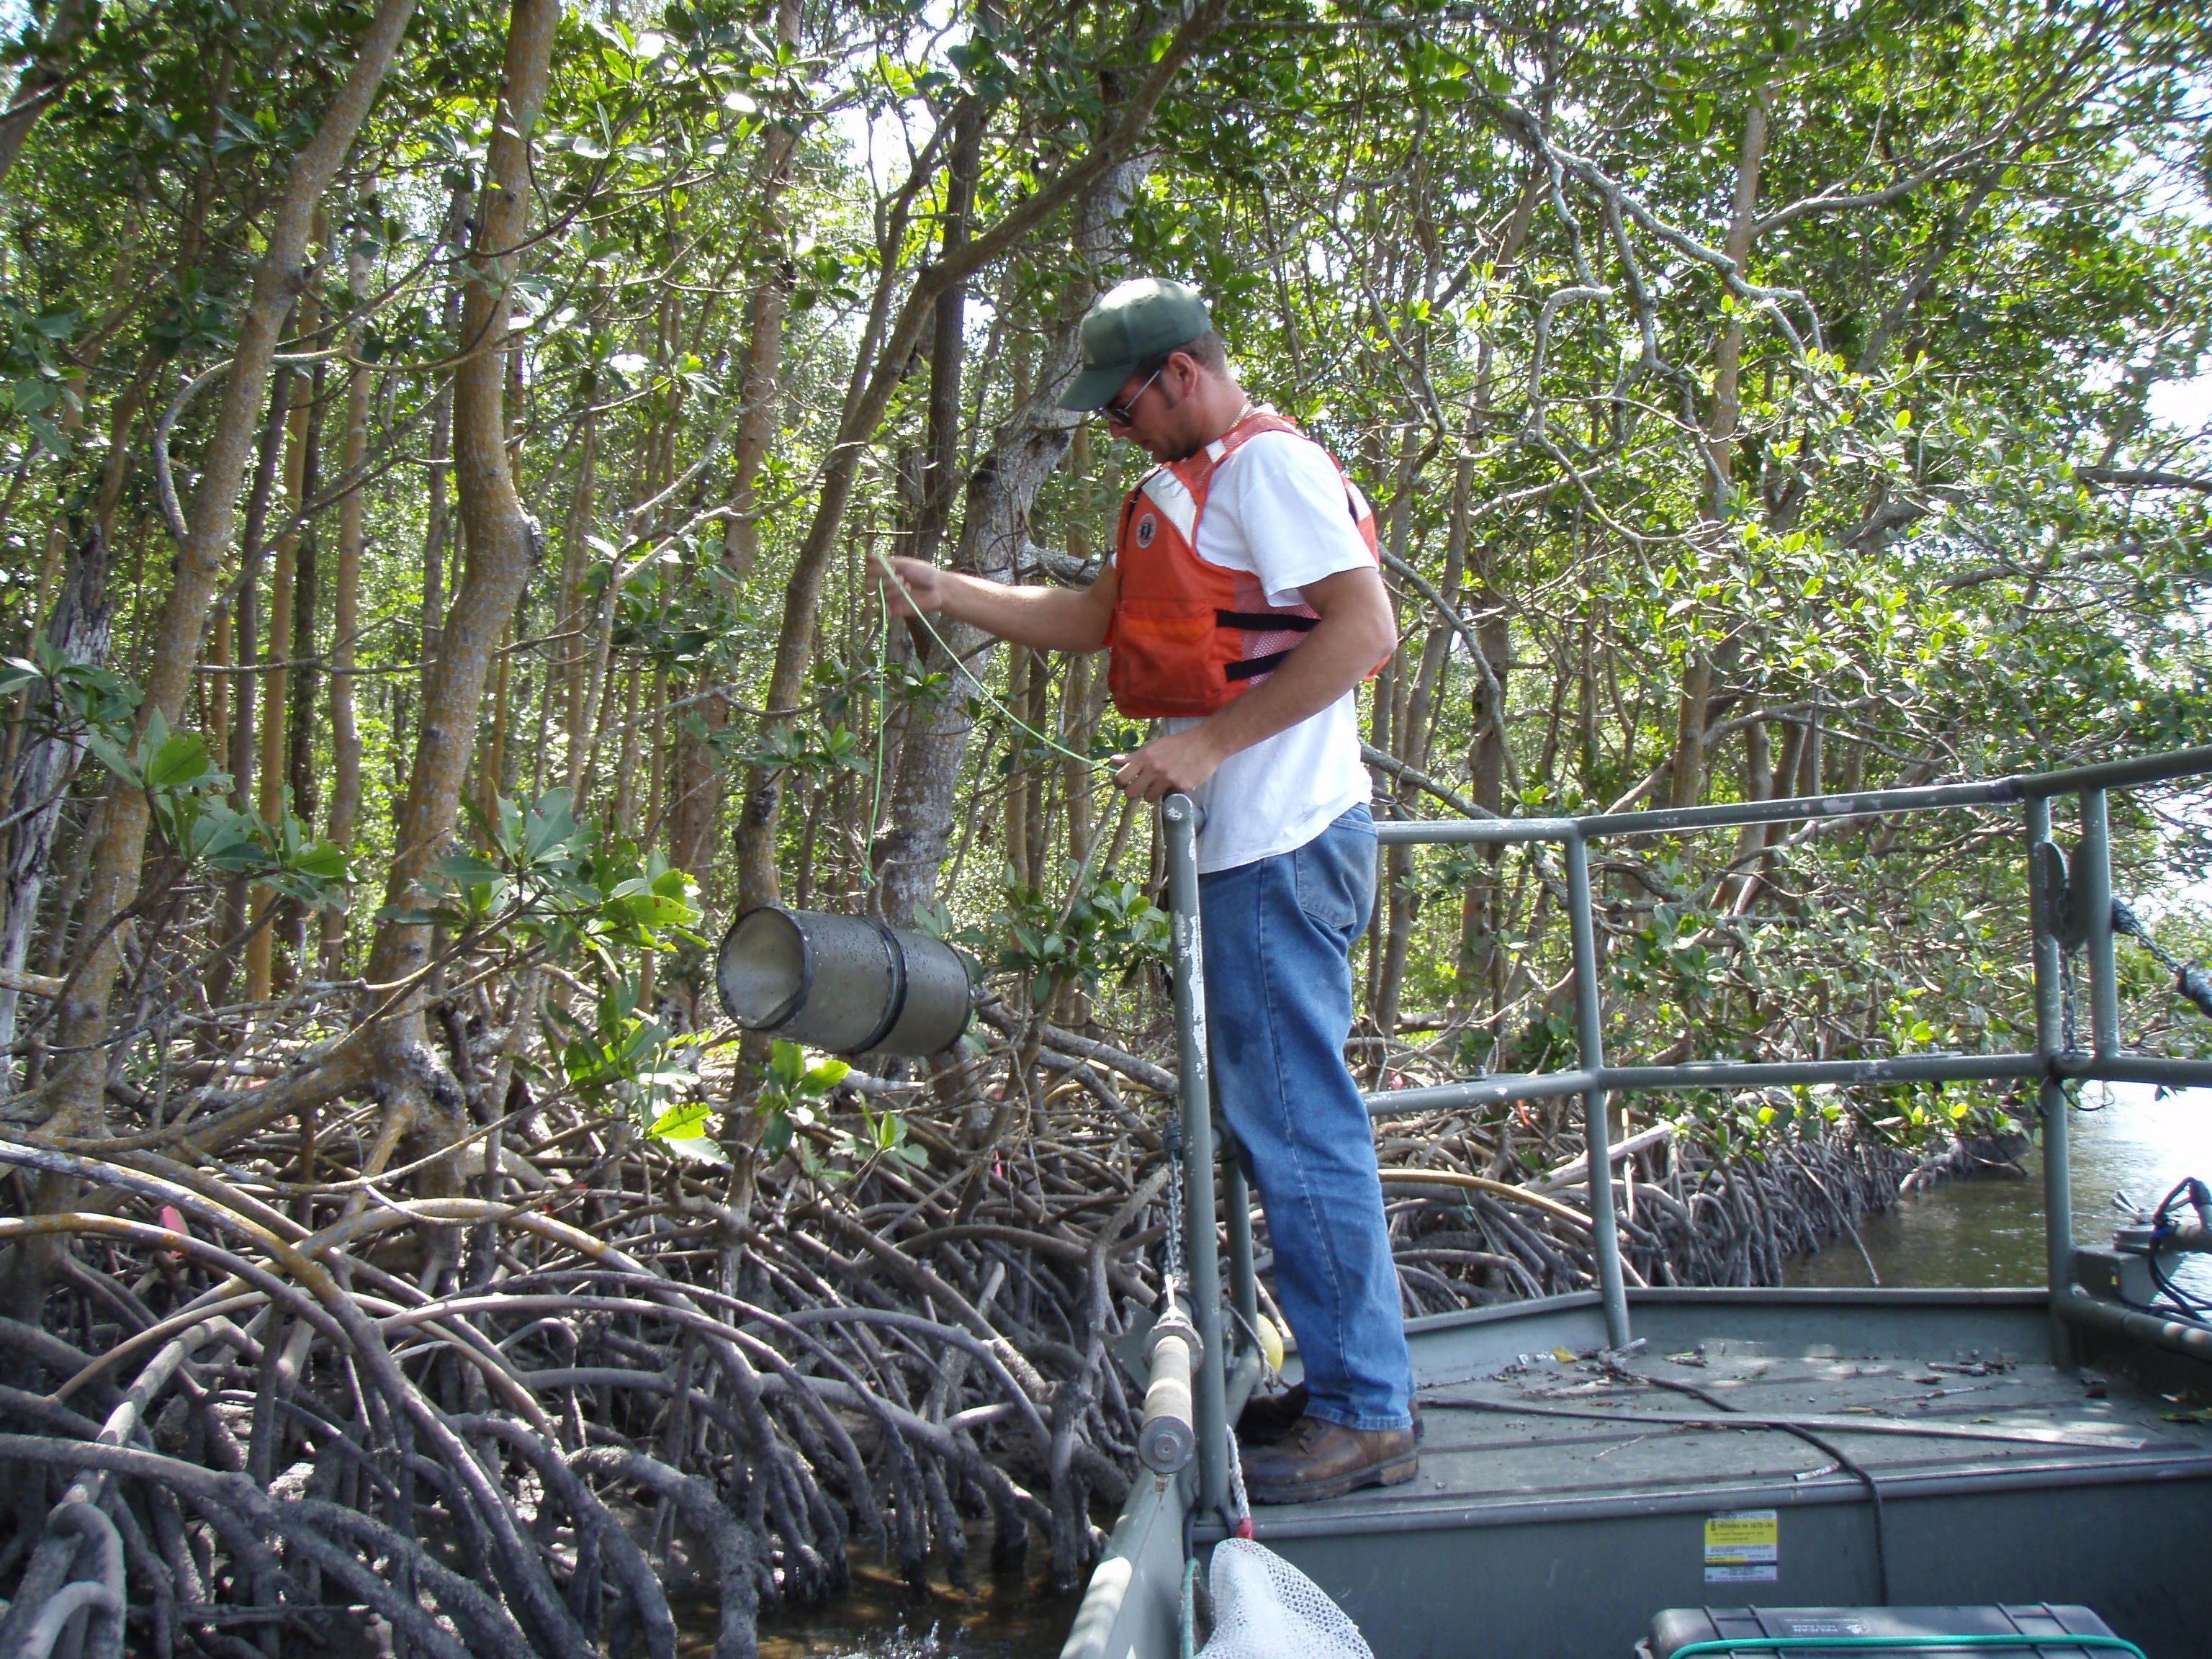 Zach Fratto retrieving a minnow trap at Shark River